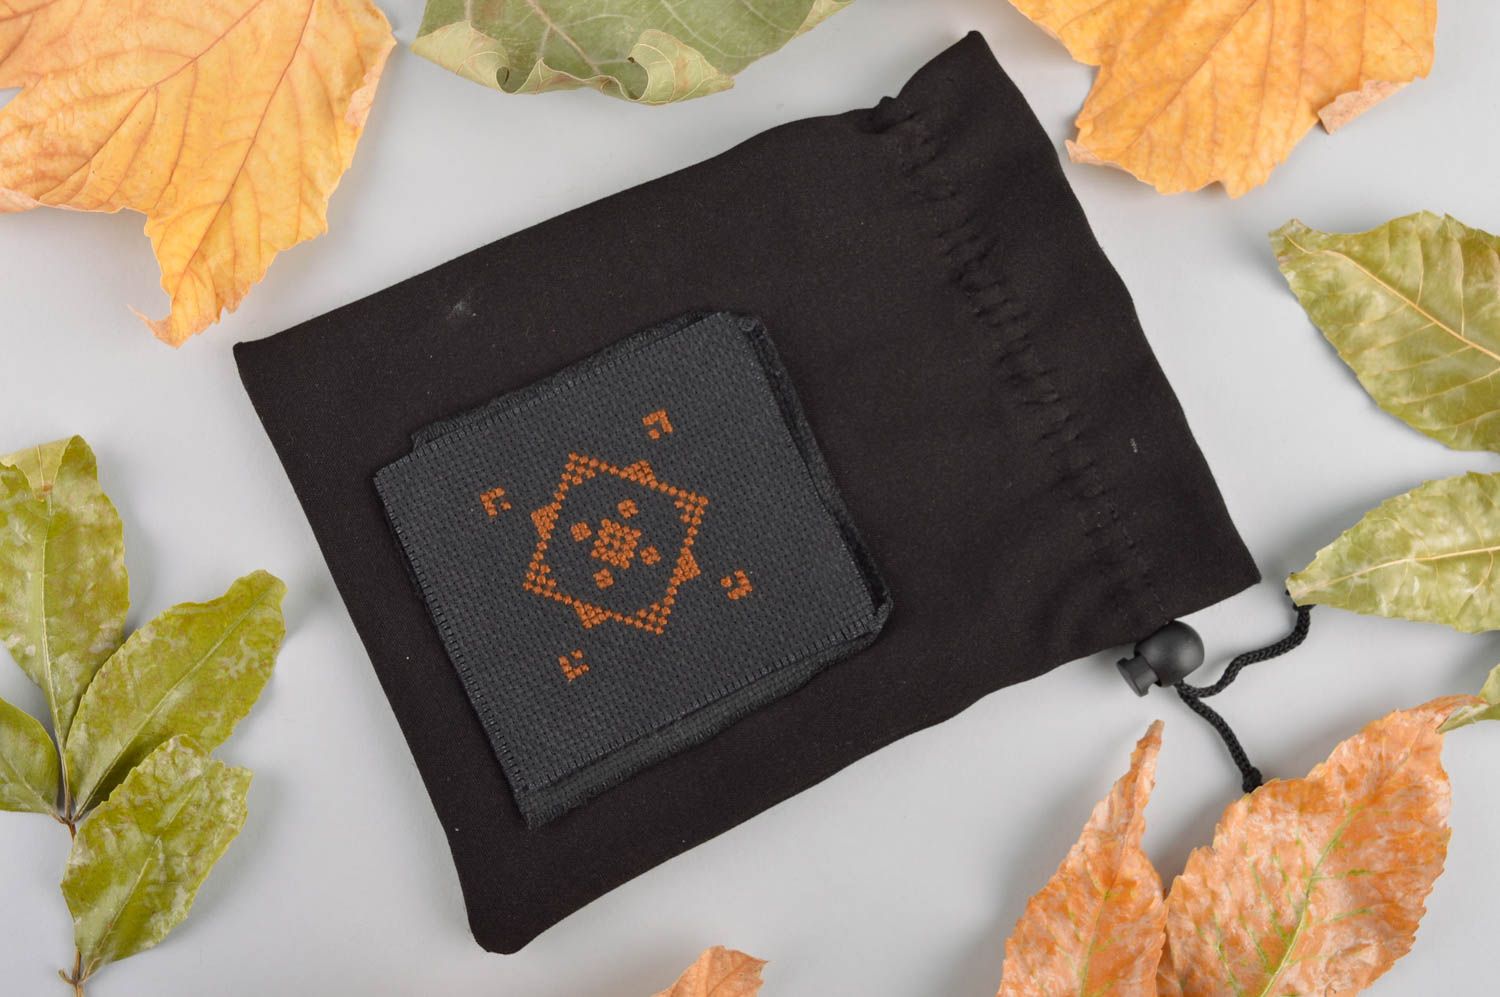 Unusual handmade fabric purse black fabric pouch amazing designs small gifts photo 1